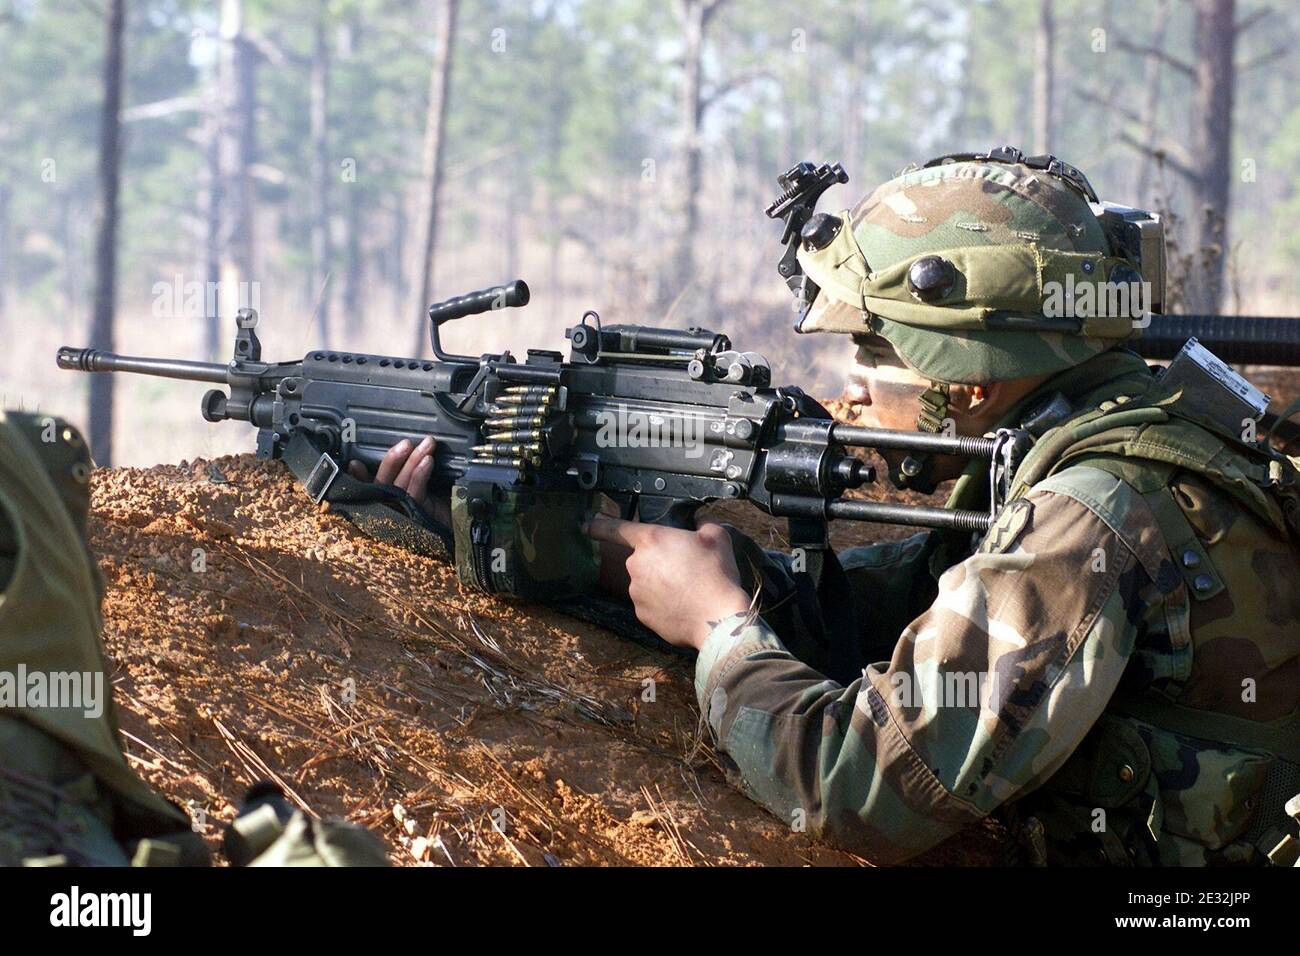 M249 FN MINIMI DA-SD-03-13170. Banque D'Images